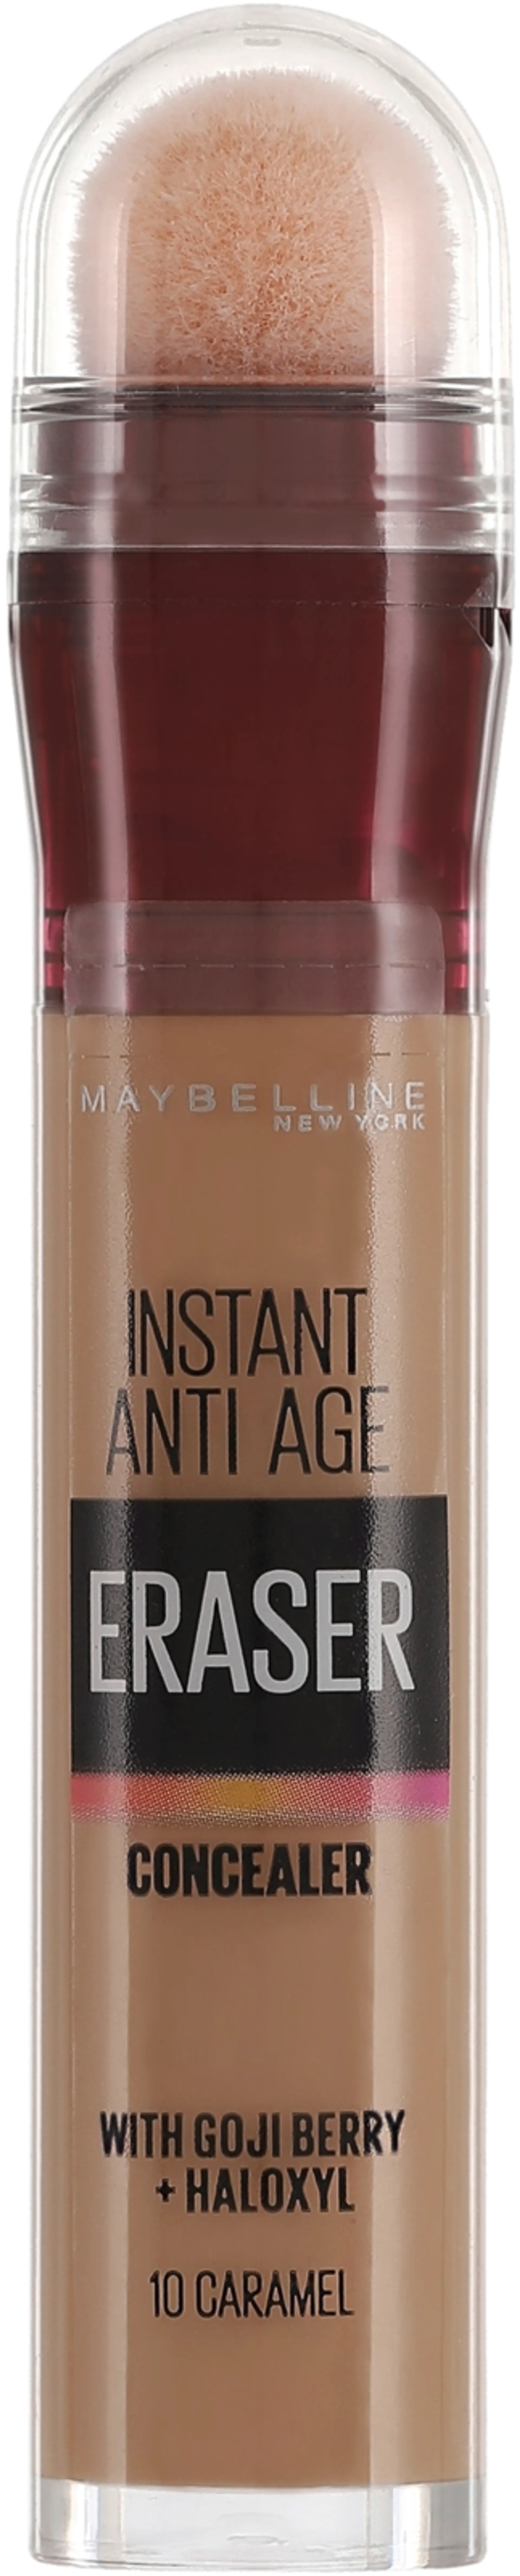 Maybelline New York Instant Anti Age Eraser 10 Caramel peitevoide 6,8ml